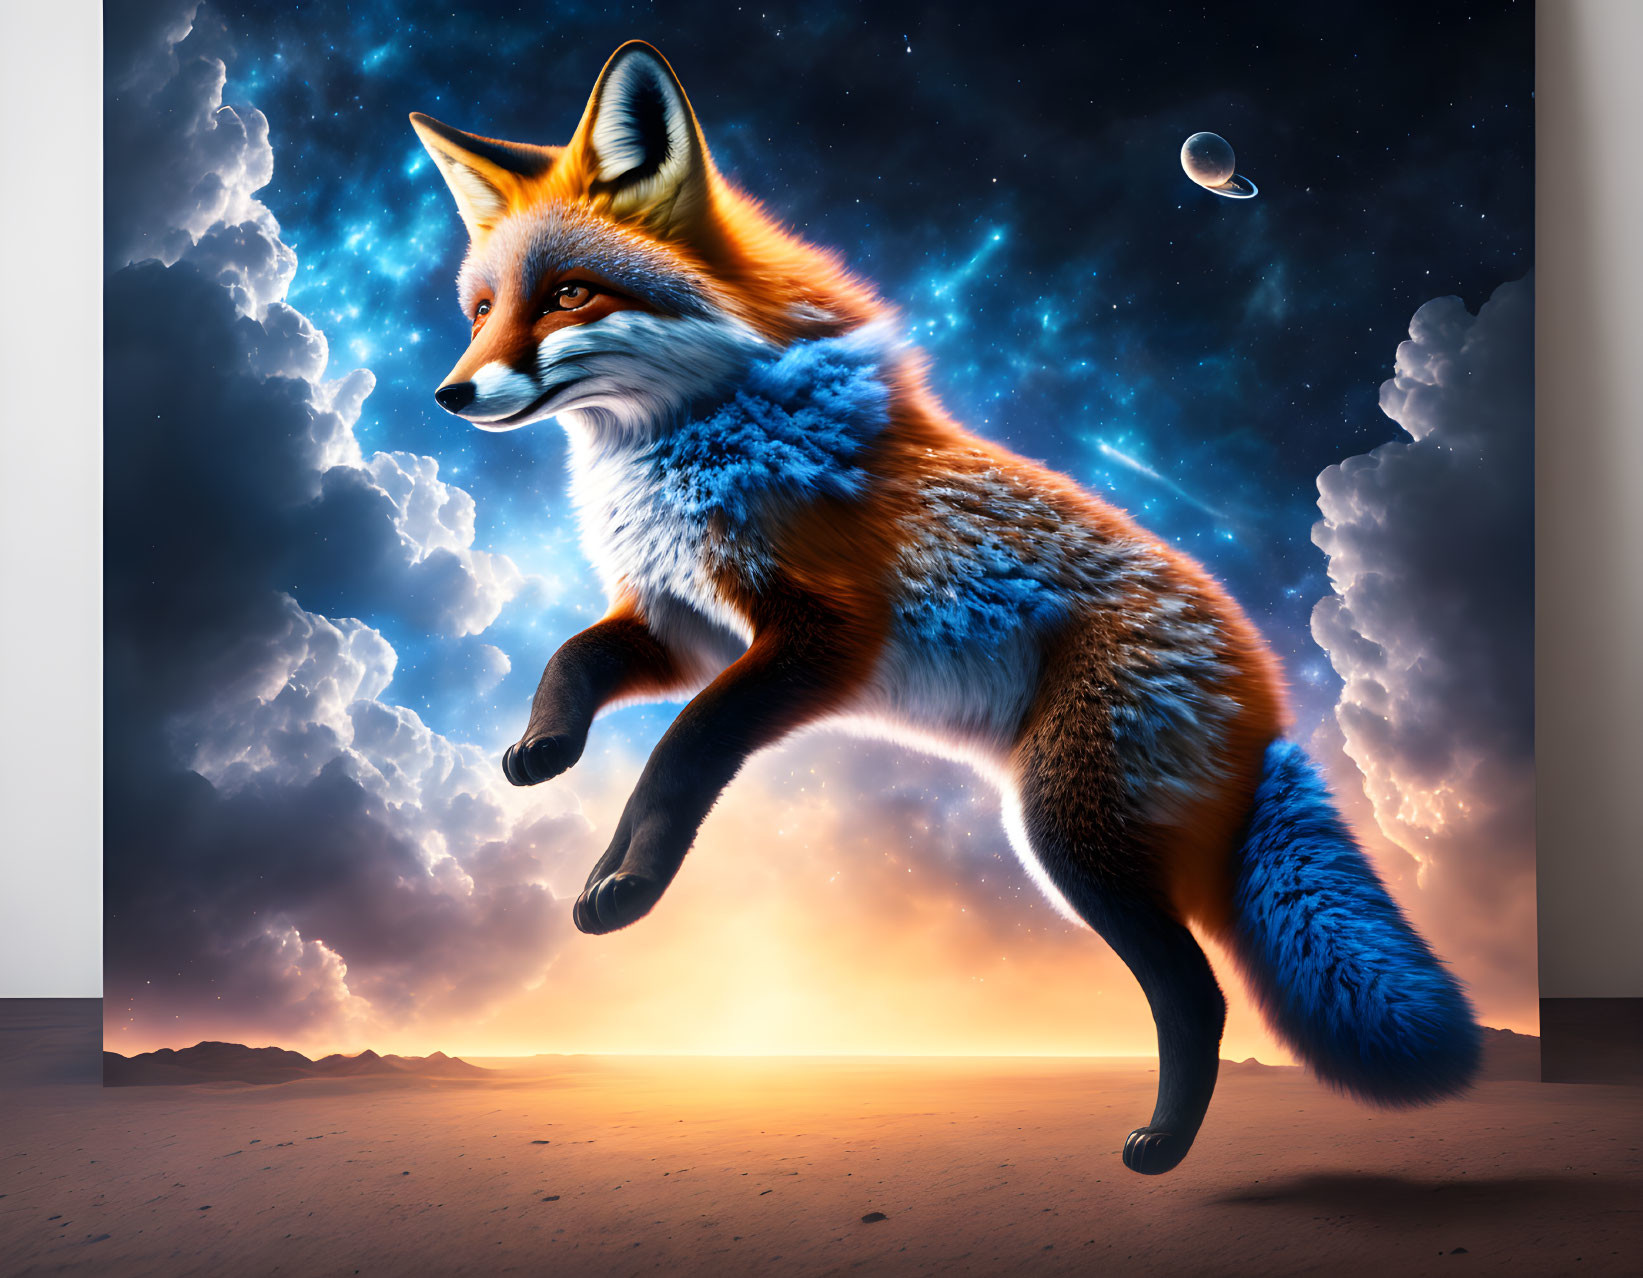 Oversized fox with vibrant fur in surreal desert landscape